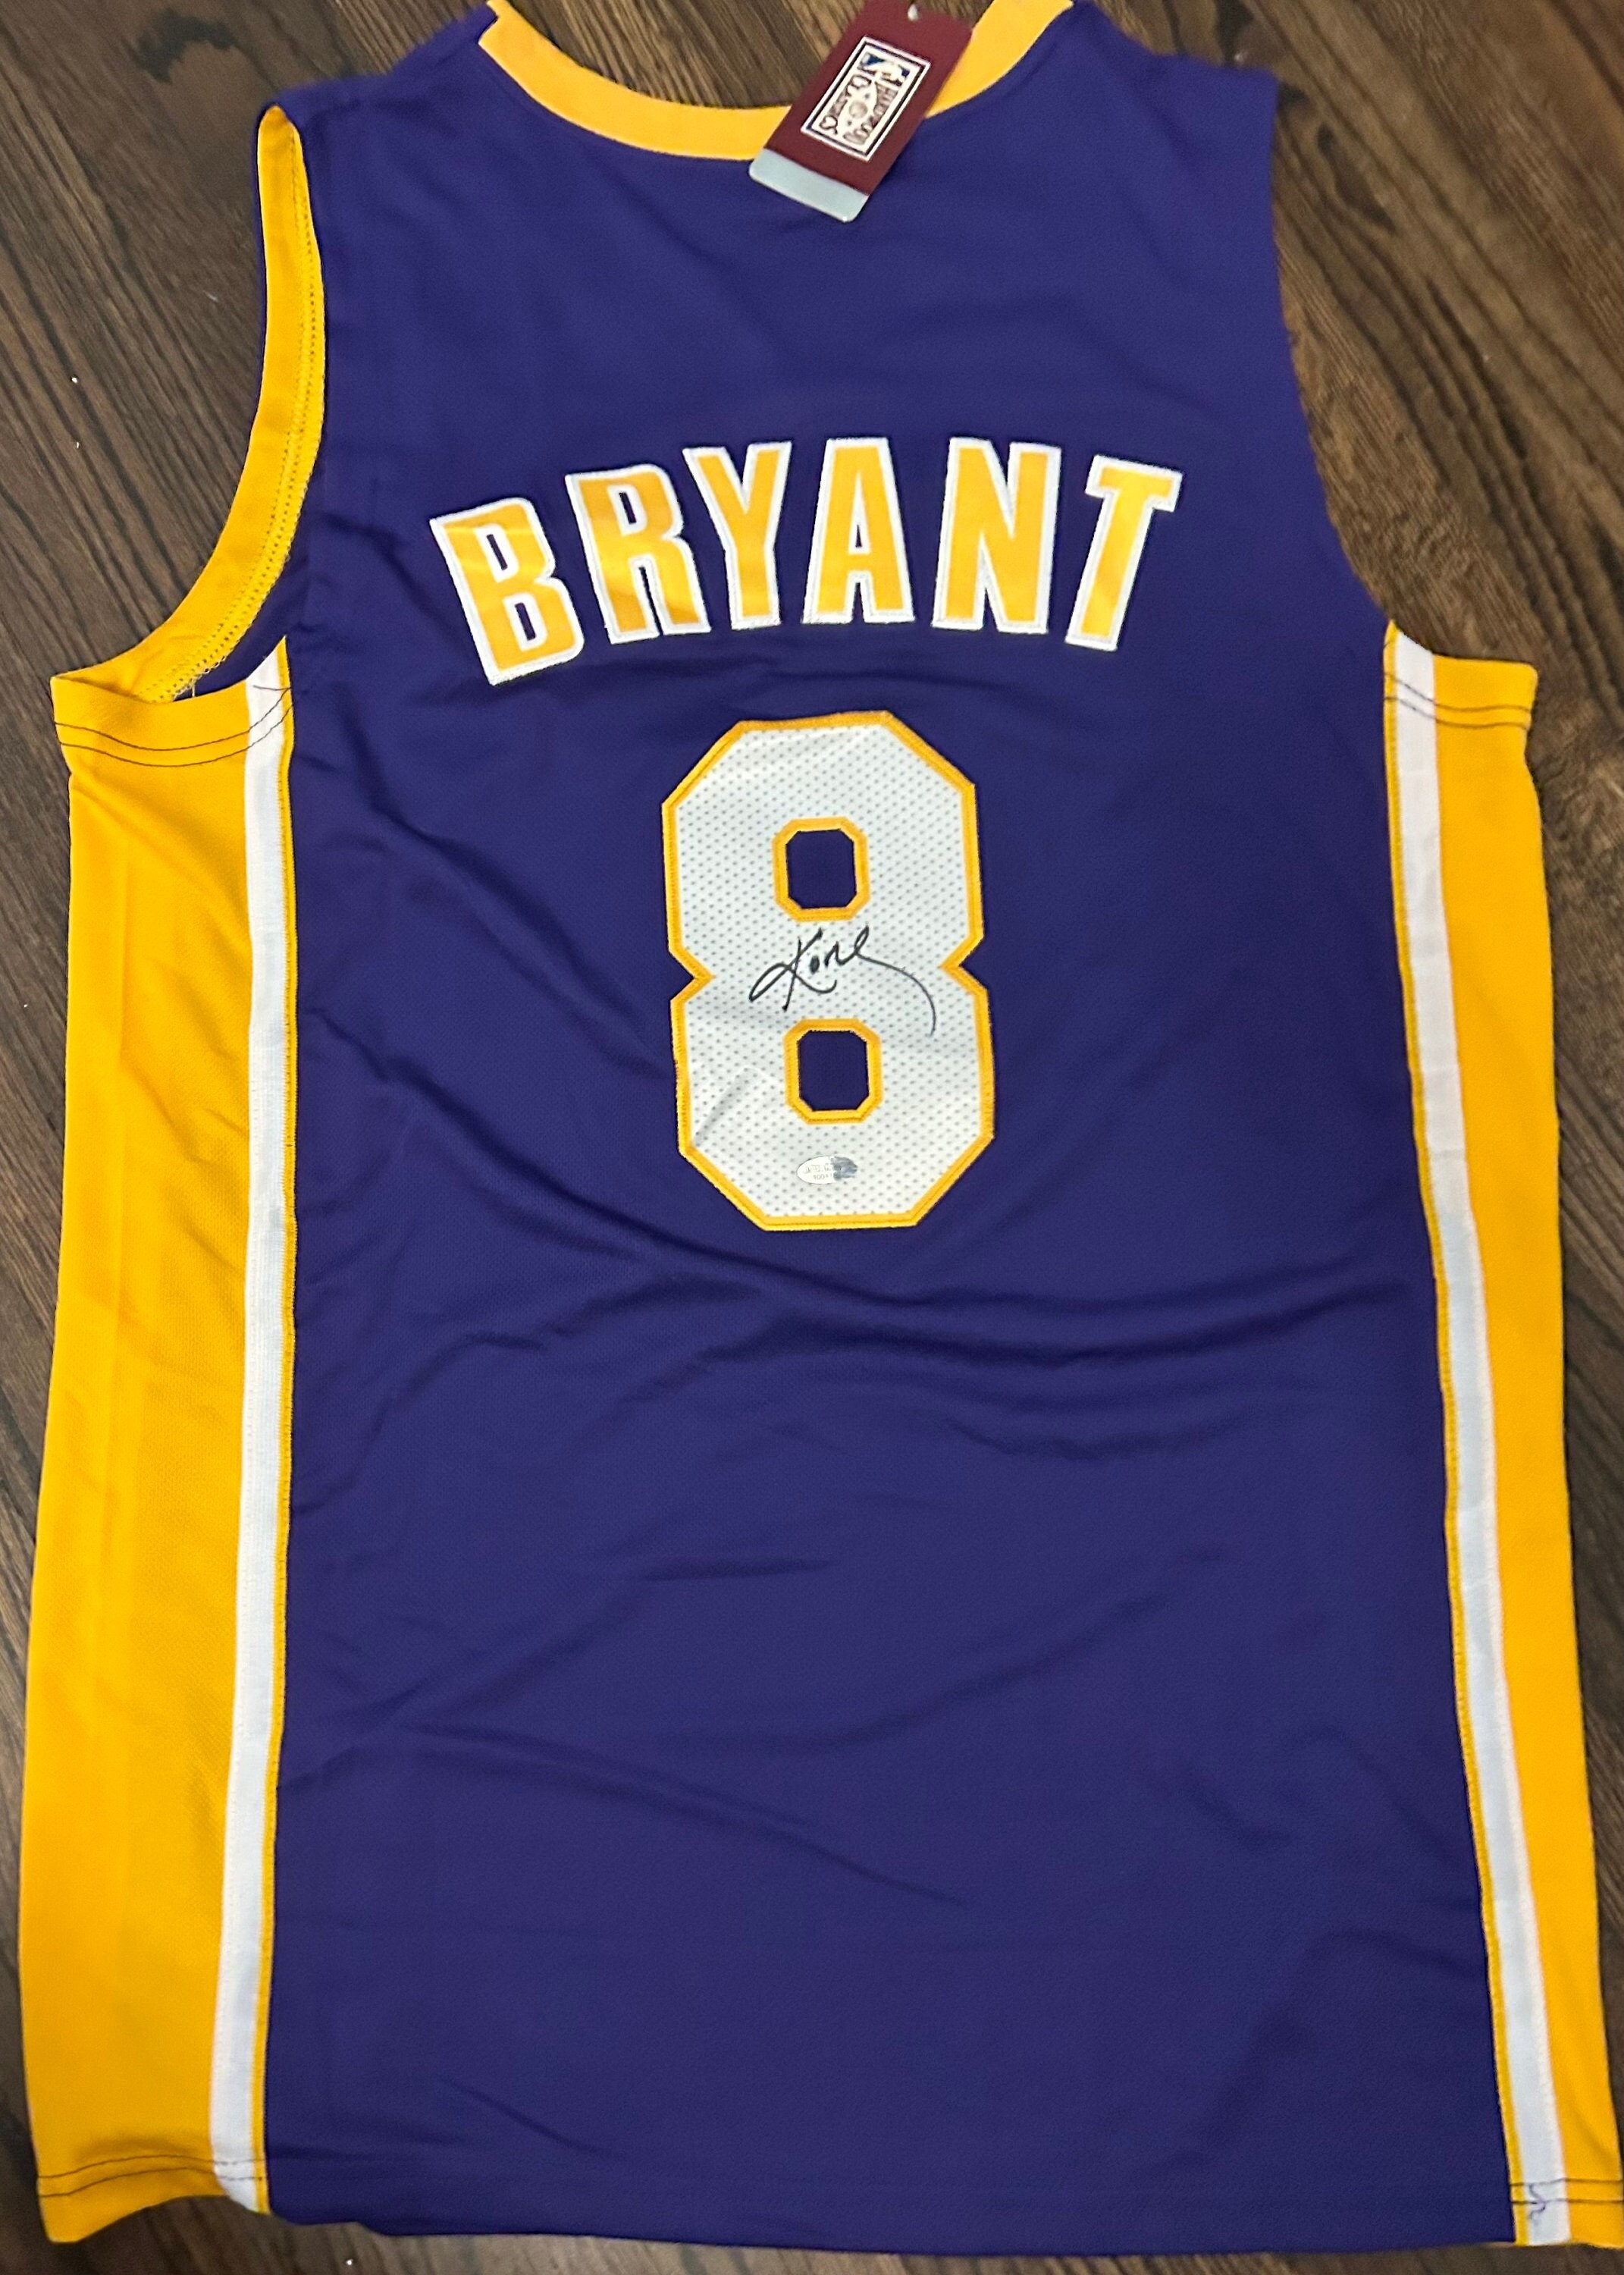 Kobe Bryant Black Mamba Custom Snake Print Stitched Basketball Jersey Size S